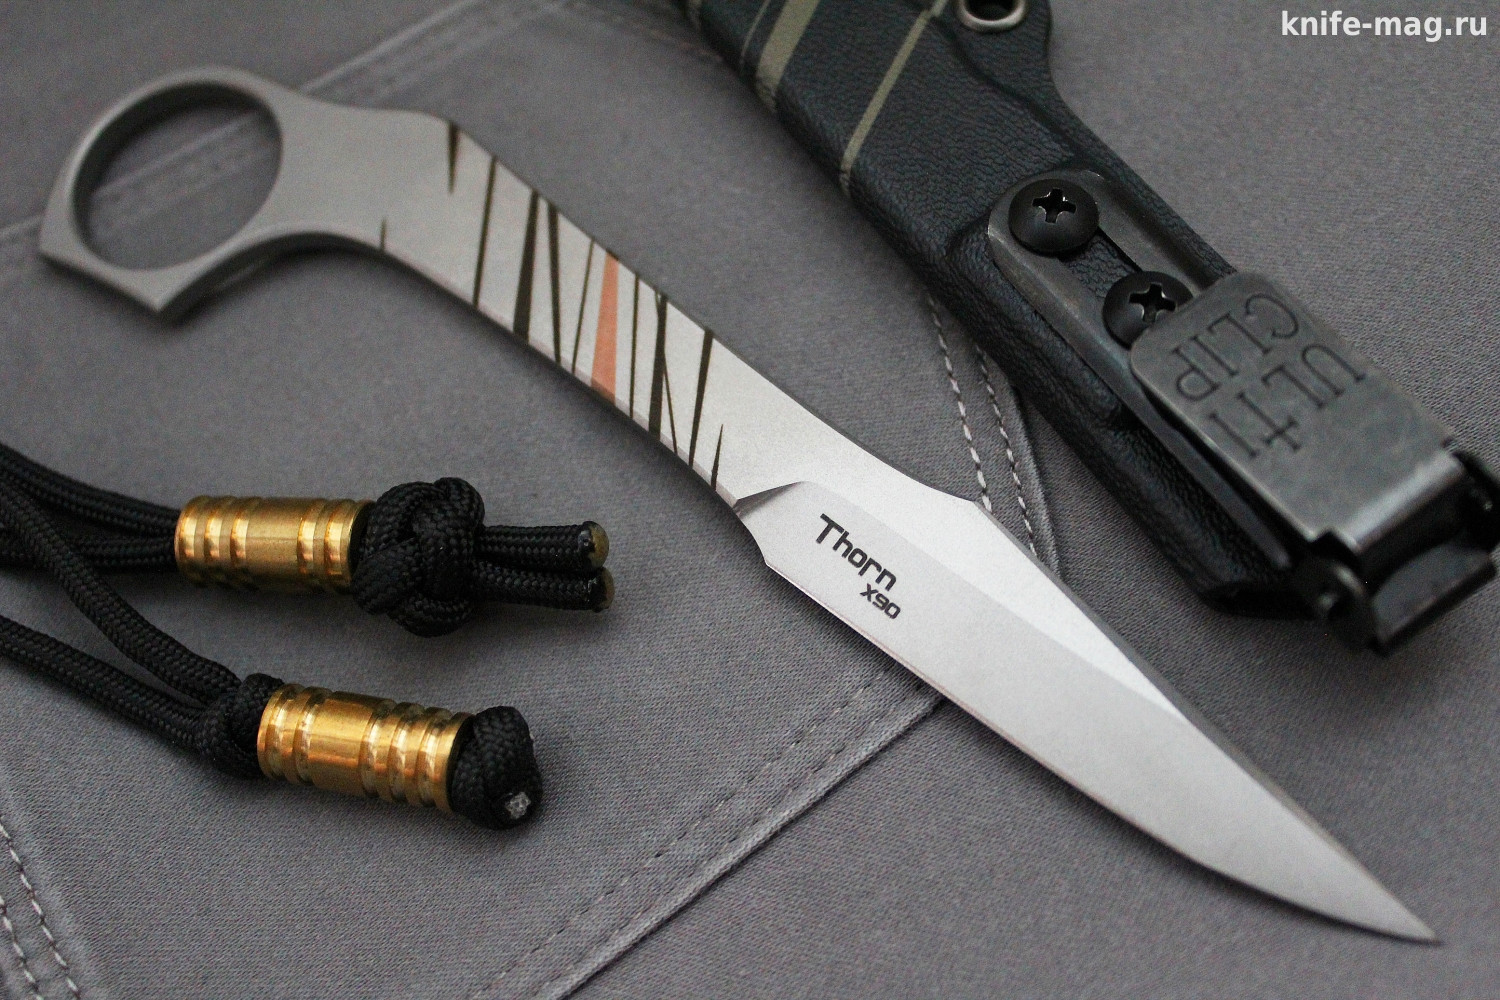 Нож Thorn n.c.Custom. NC-Custom Thorn тактический нож. Нож Торн НС кастом. Нож parachuter n.c.Custom.